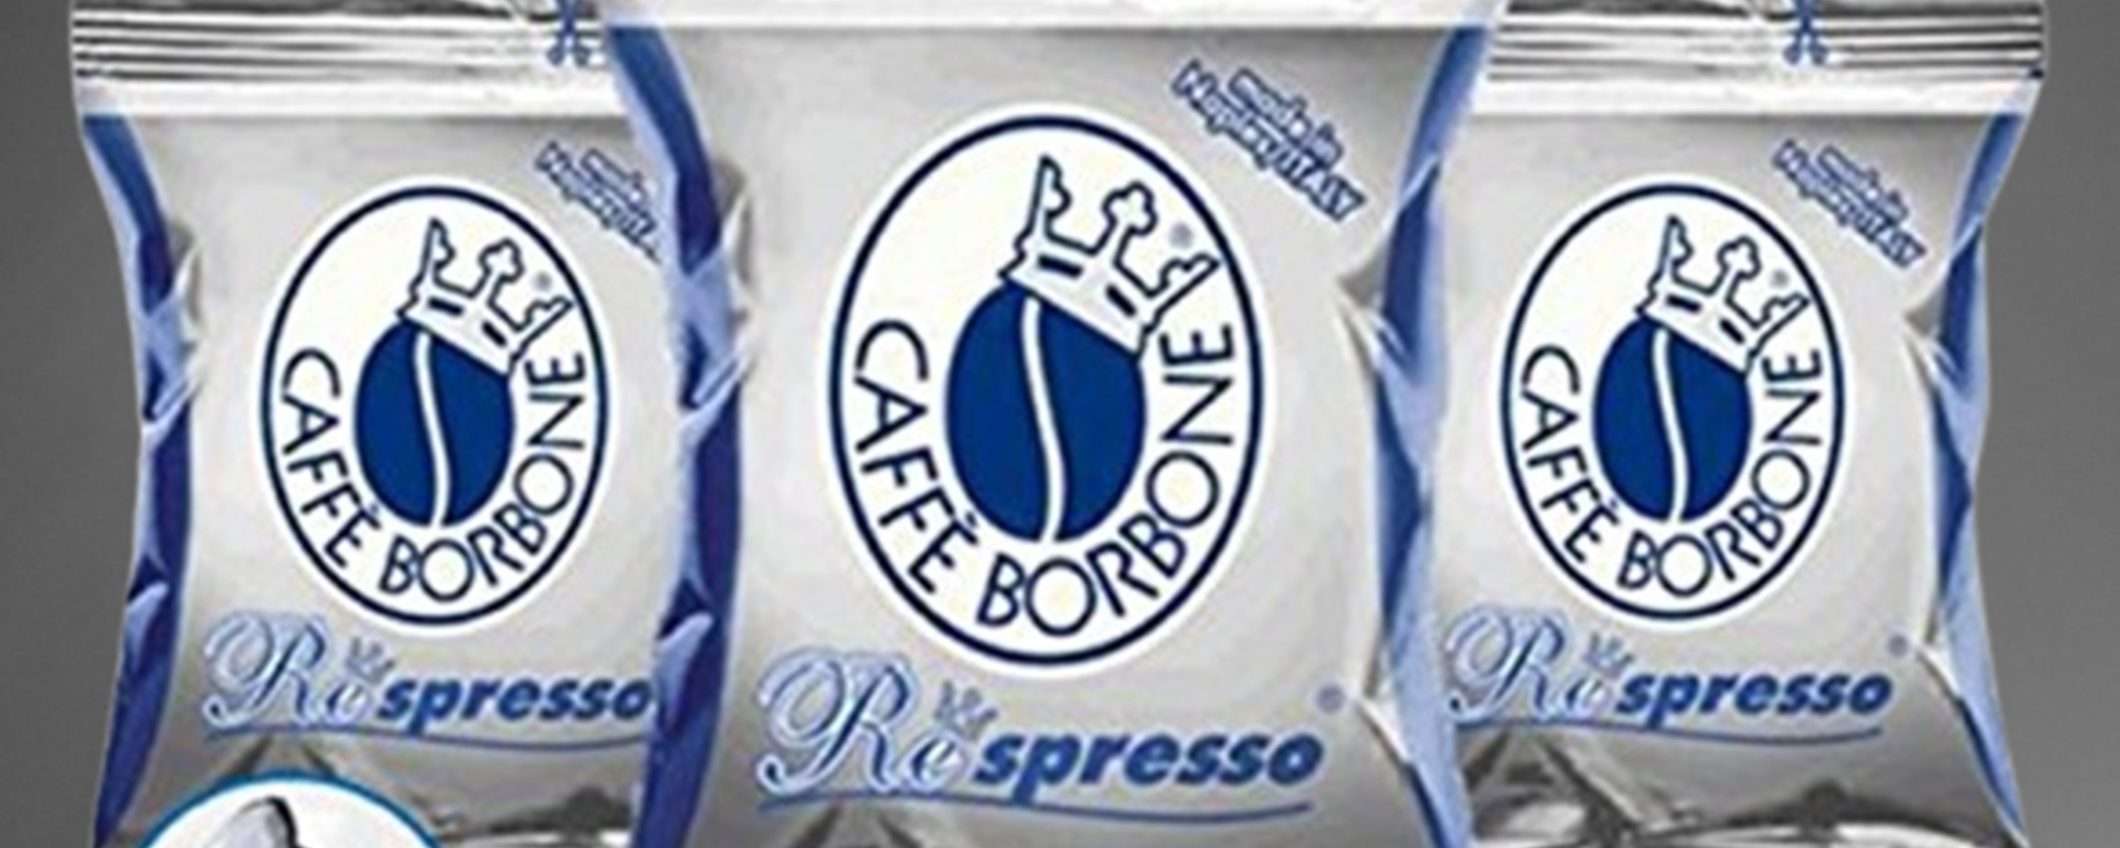 Caffè Borbone Respresso miscela Blu: 400 capsule a soli 68€ (CODICE SCONTO di eBay)